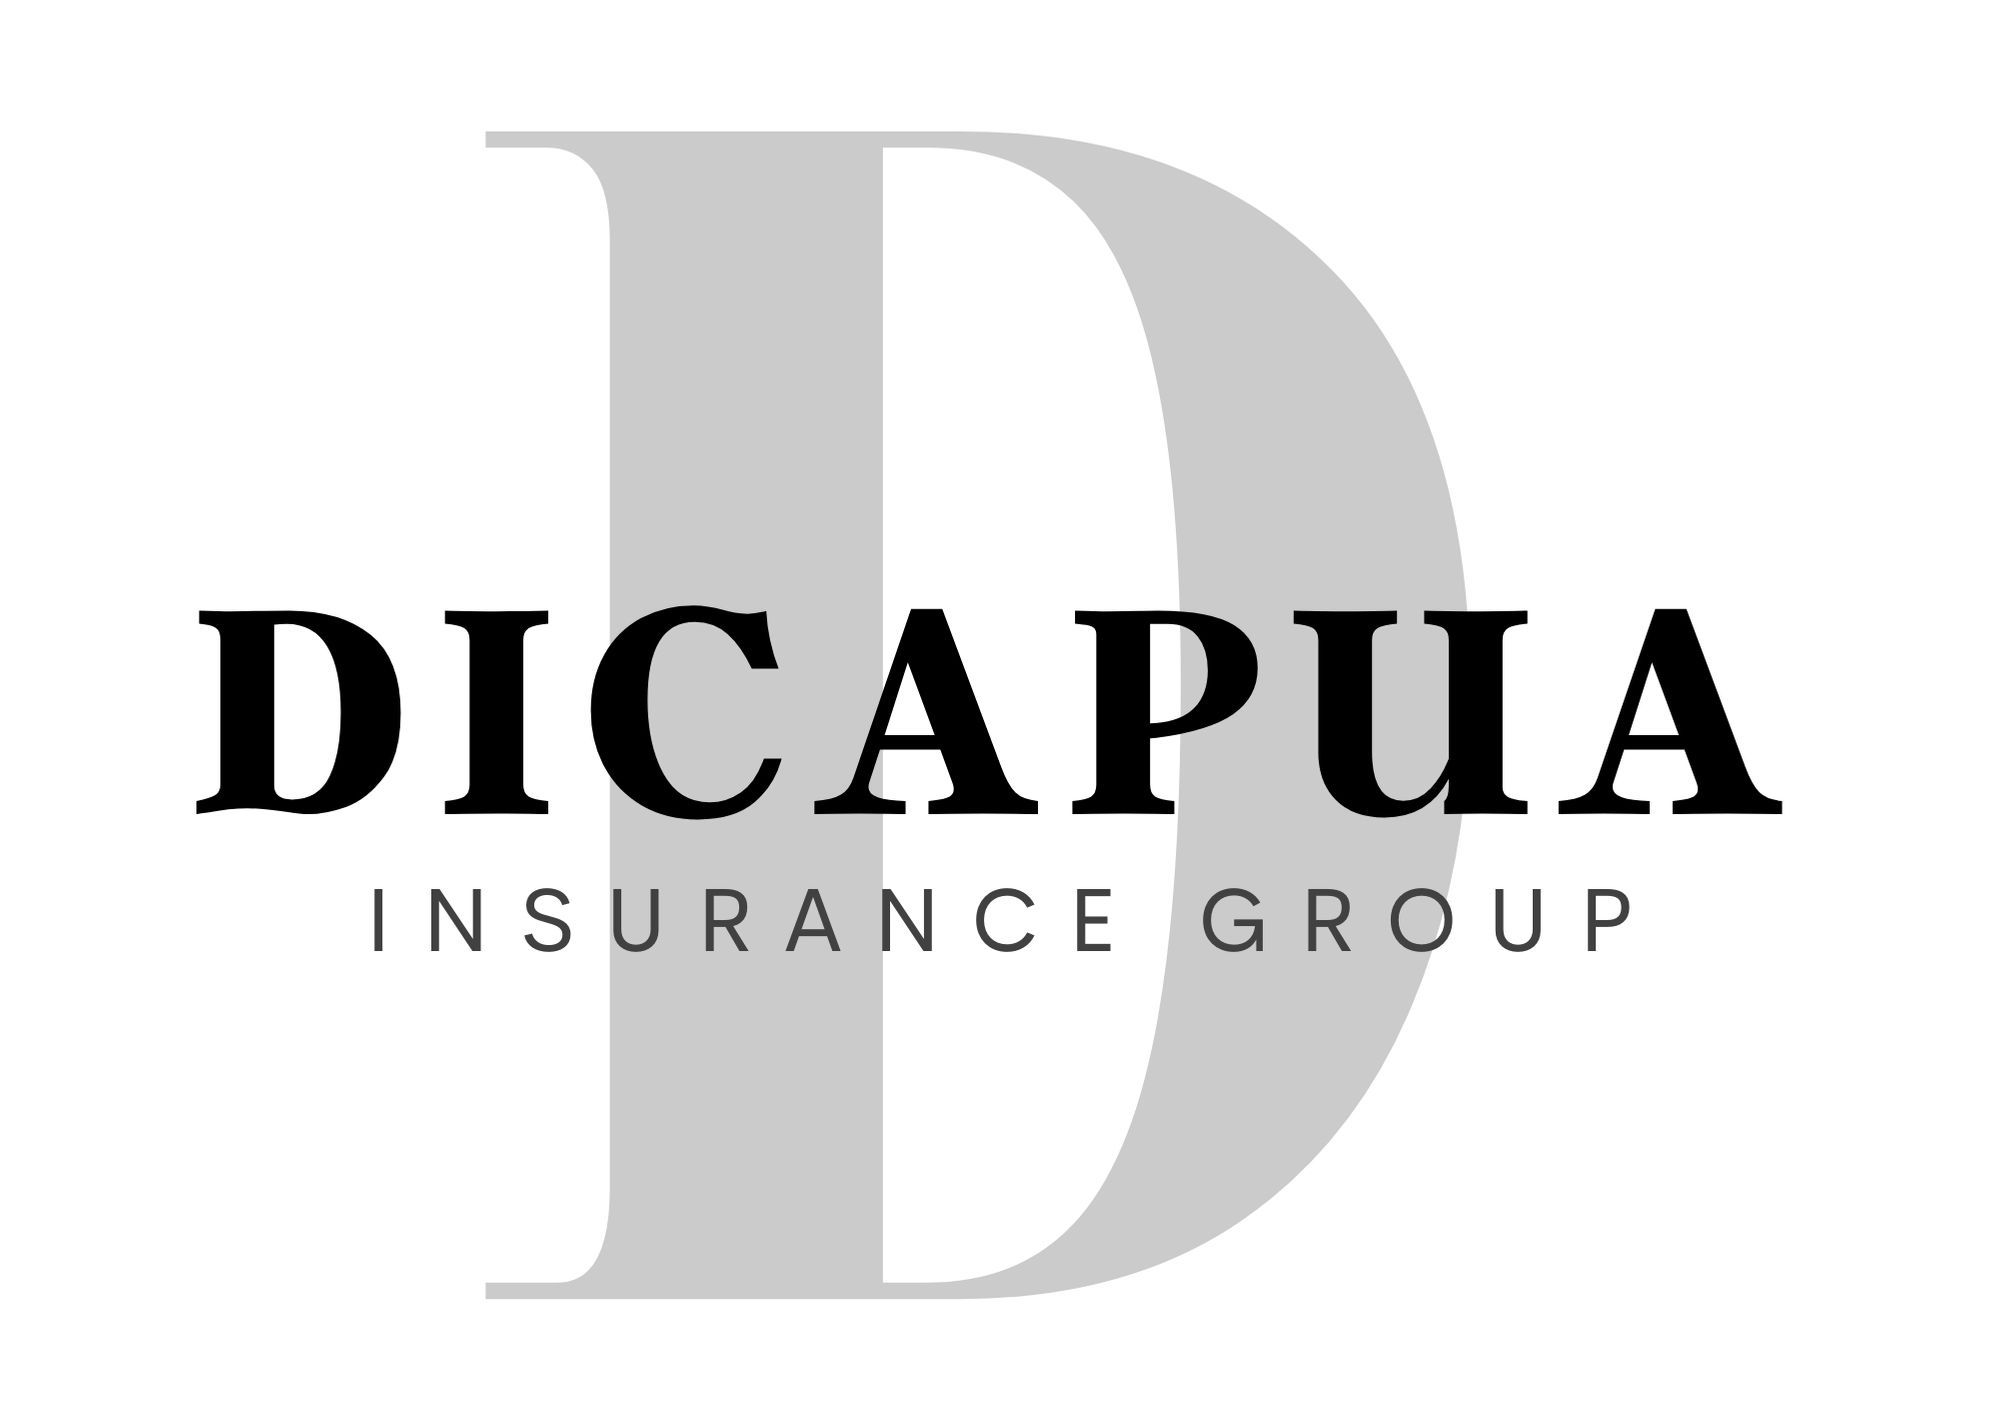 DiCapua Insurance Group